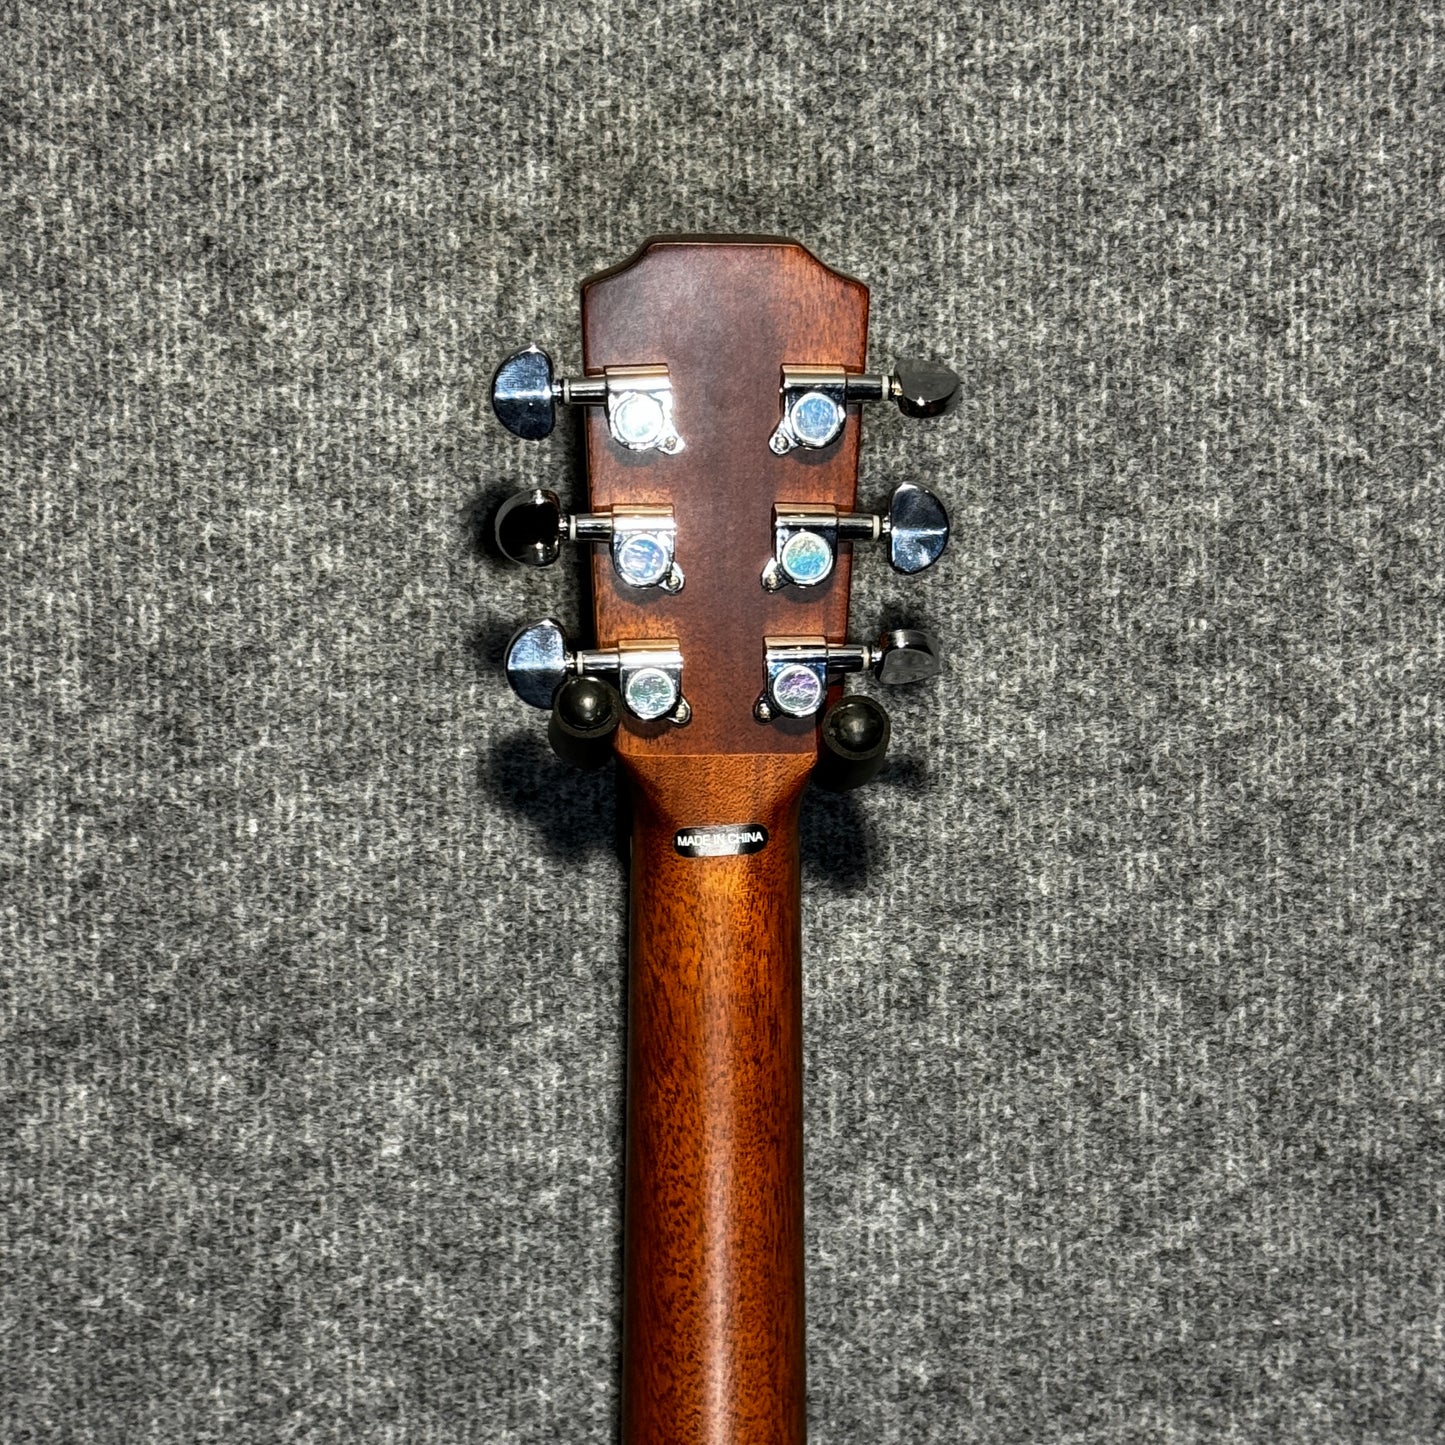 James Neligan Dovern Parlour Size Electro Acoustic Guitar